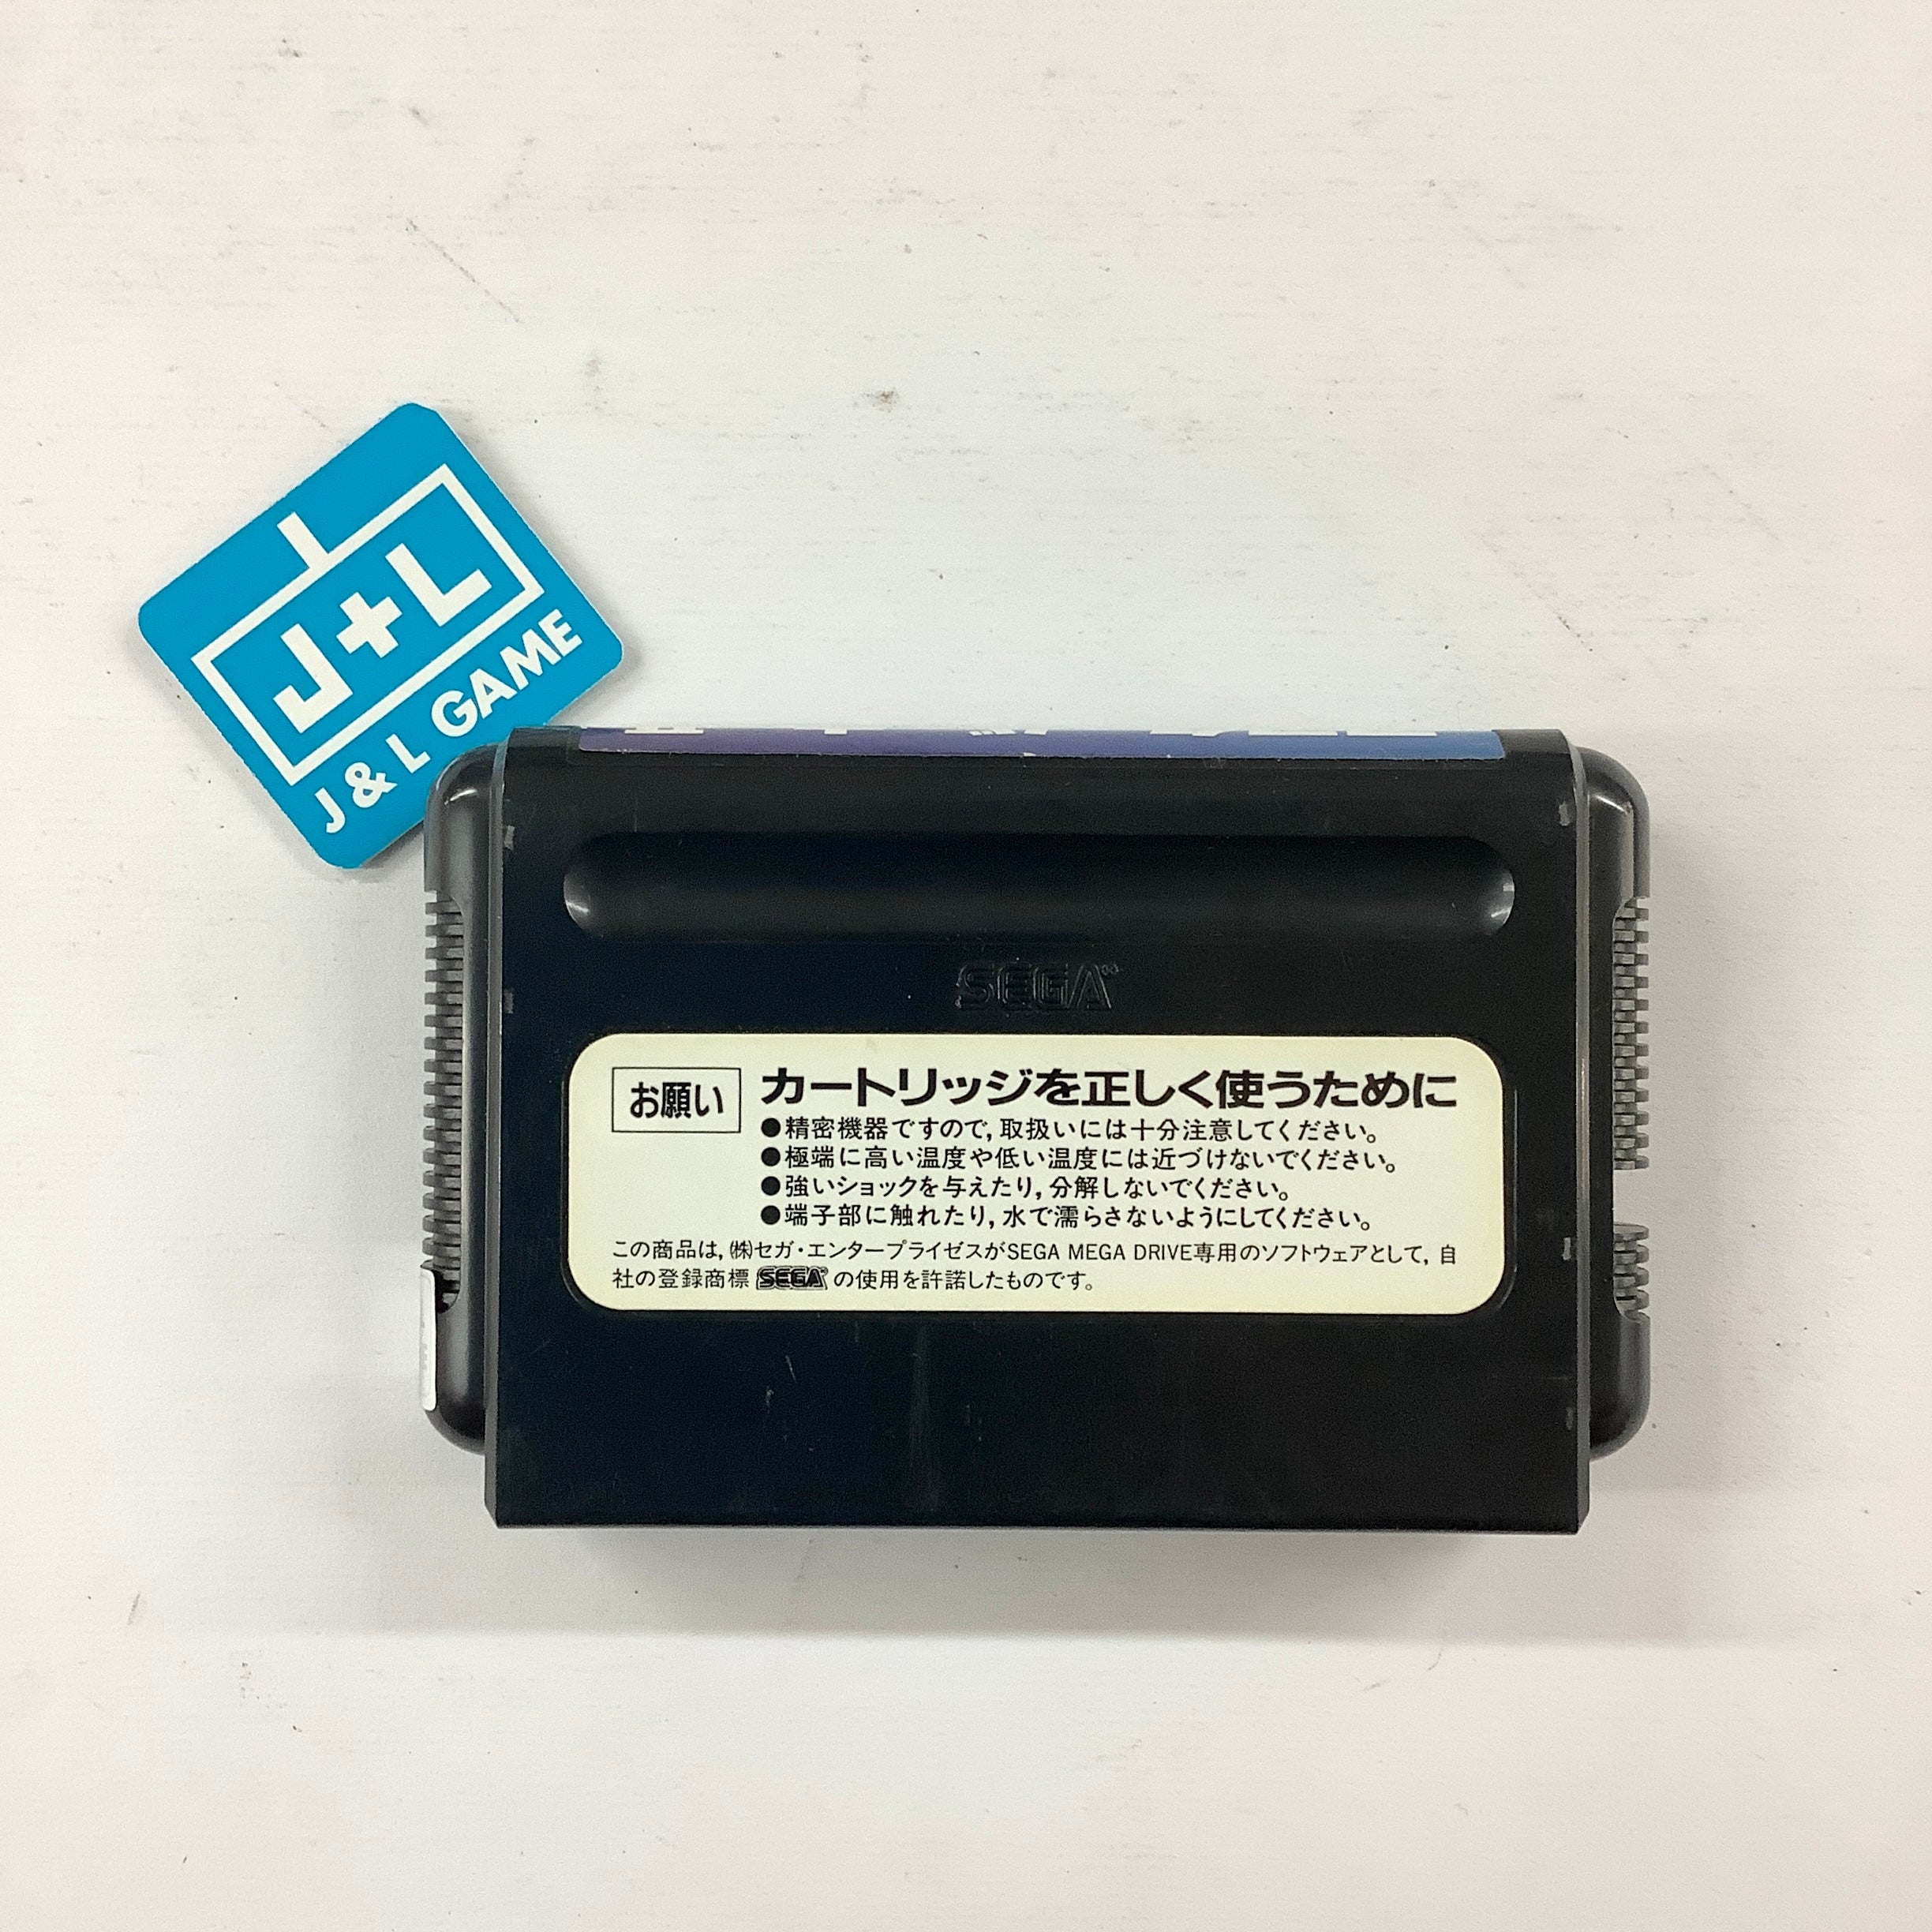 After Burner II - (SG) SEGA Mega Drive [Pre-Owned] (Japanese Import) Video Games Dempa Shinbunsha   